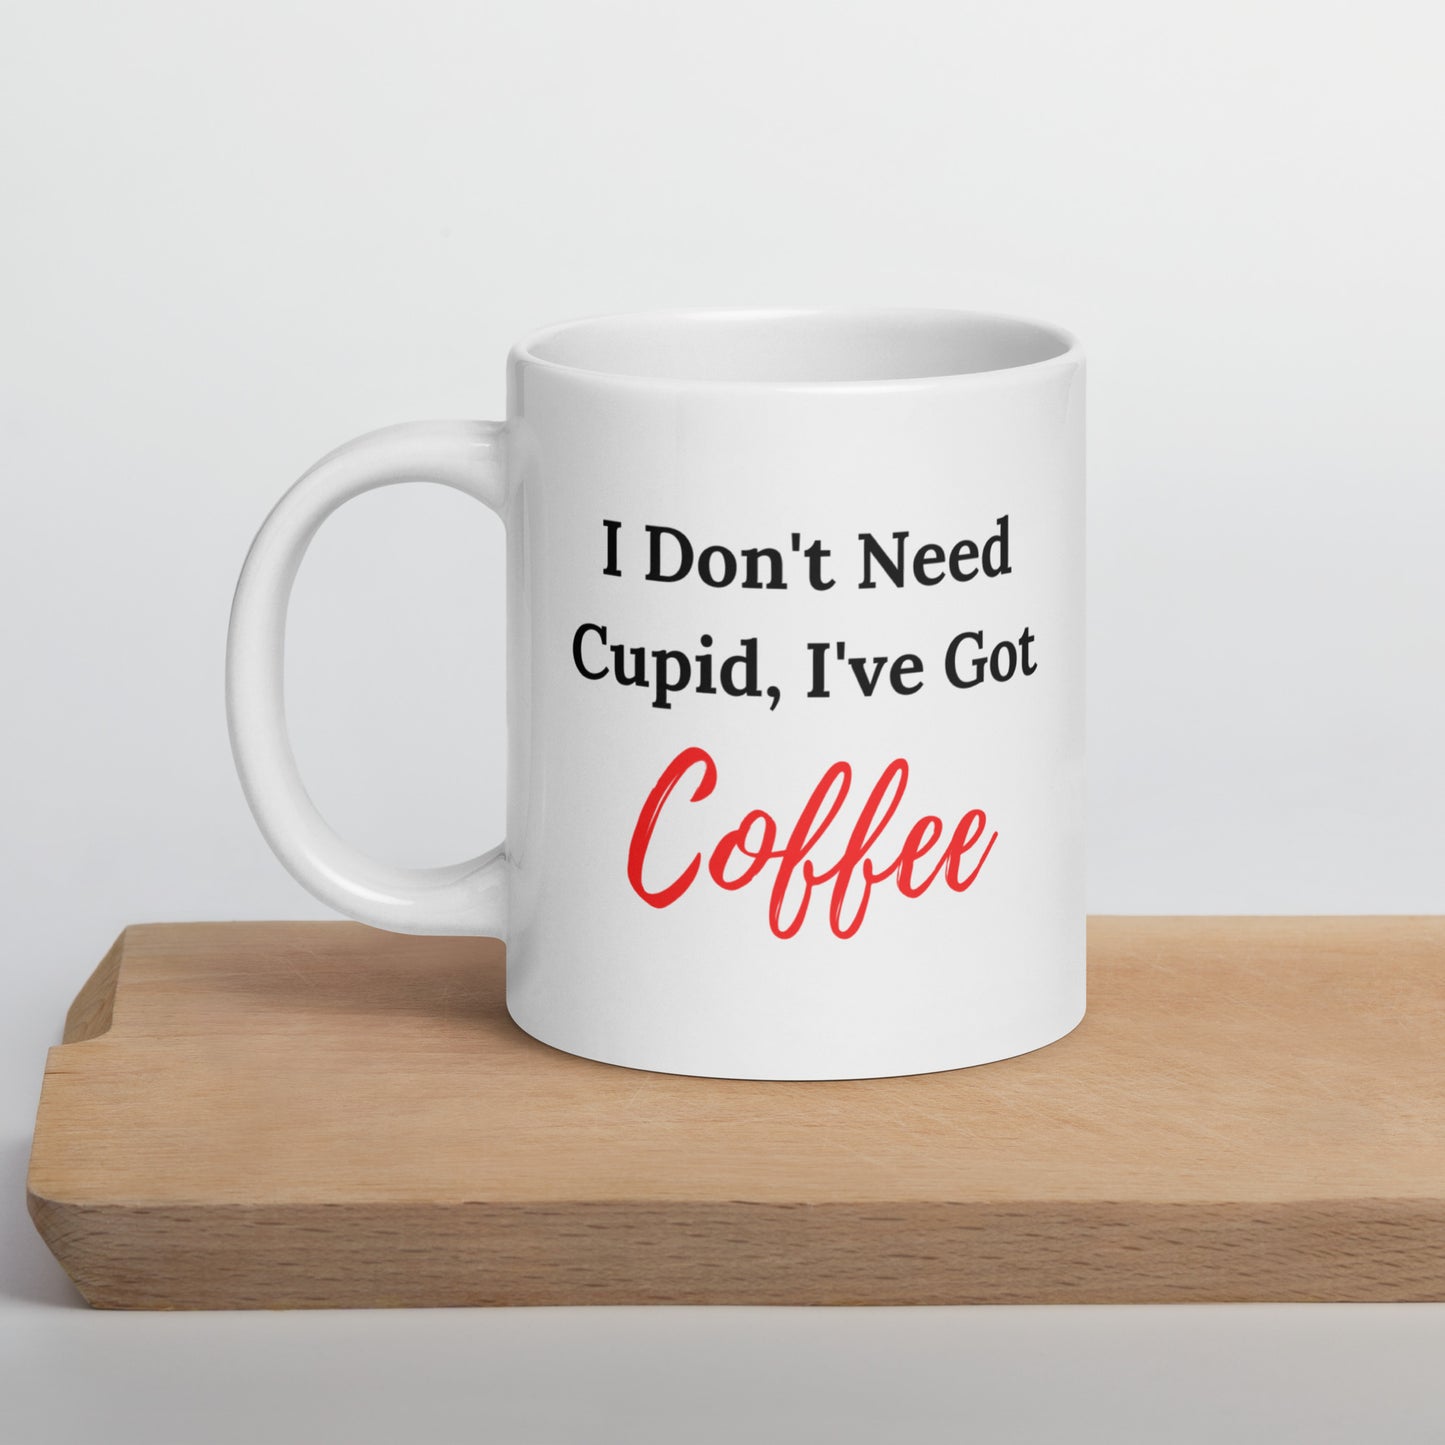 I Don't Need Cupid, I've Got Coffee, AntiValentine Gift, Valentine Coffee Mug, Funny Valentine Saying, Funny Valentine, Anti Valentine's Day